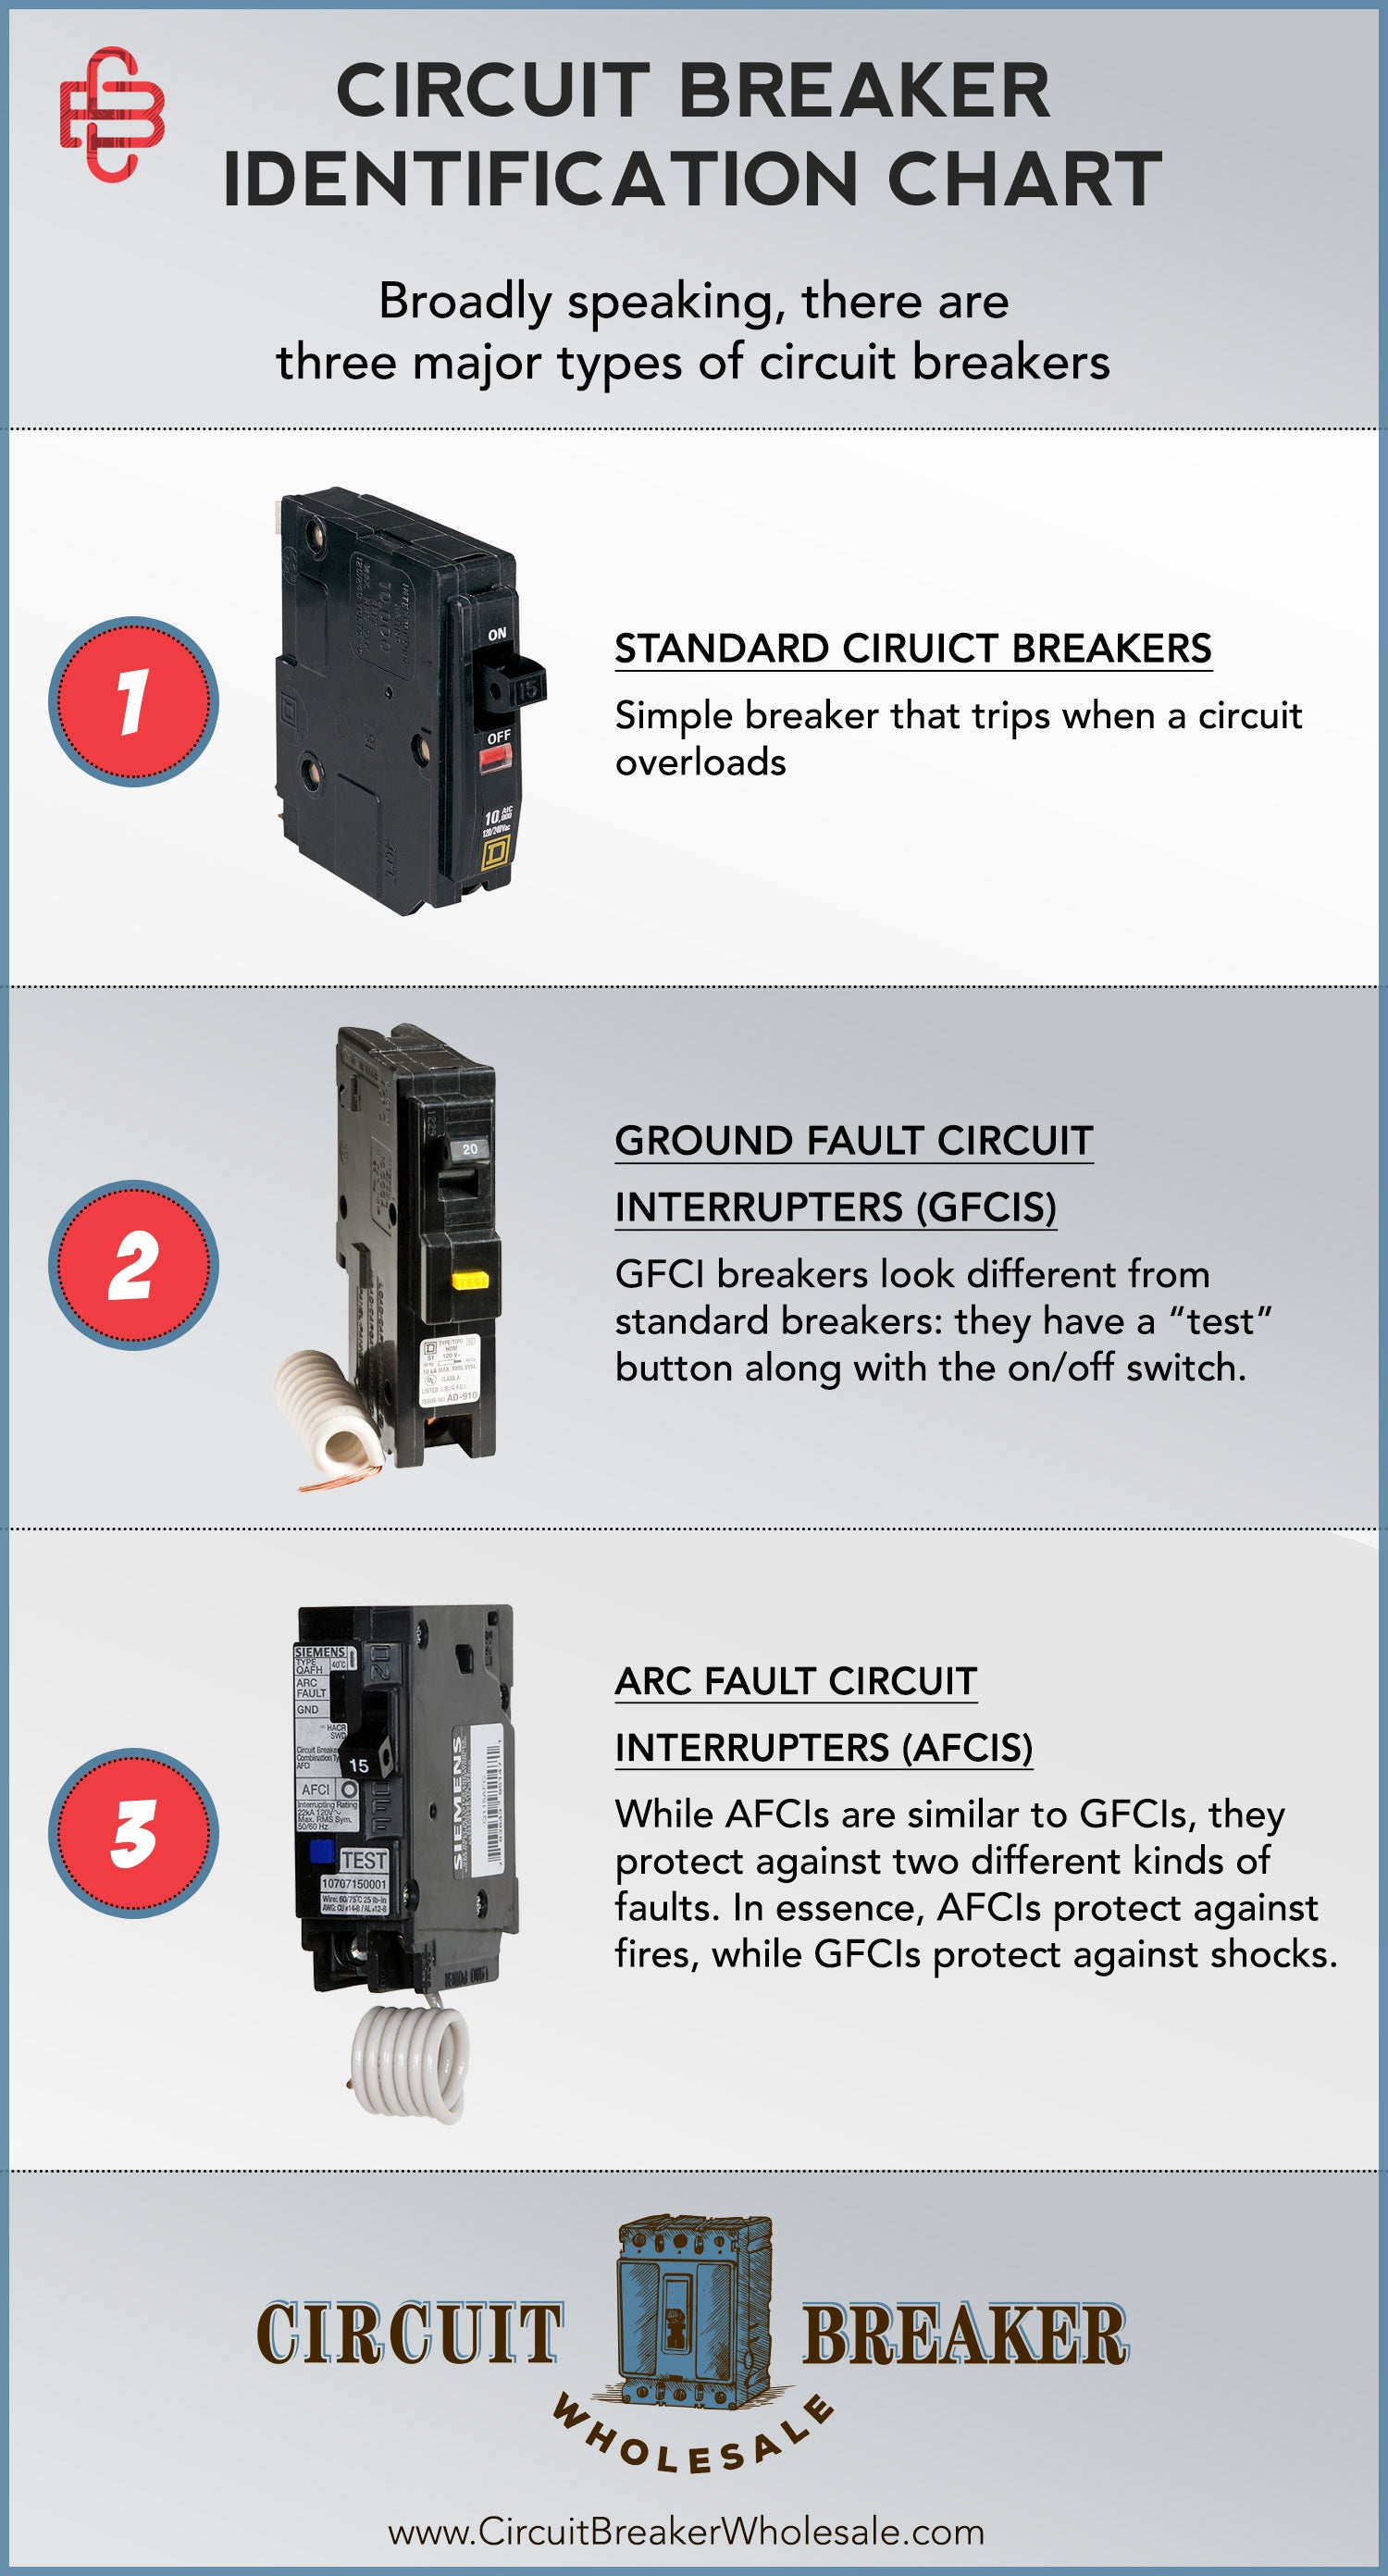 How To Identify Circuit Breakers